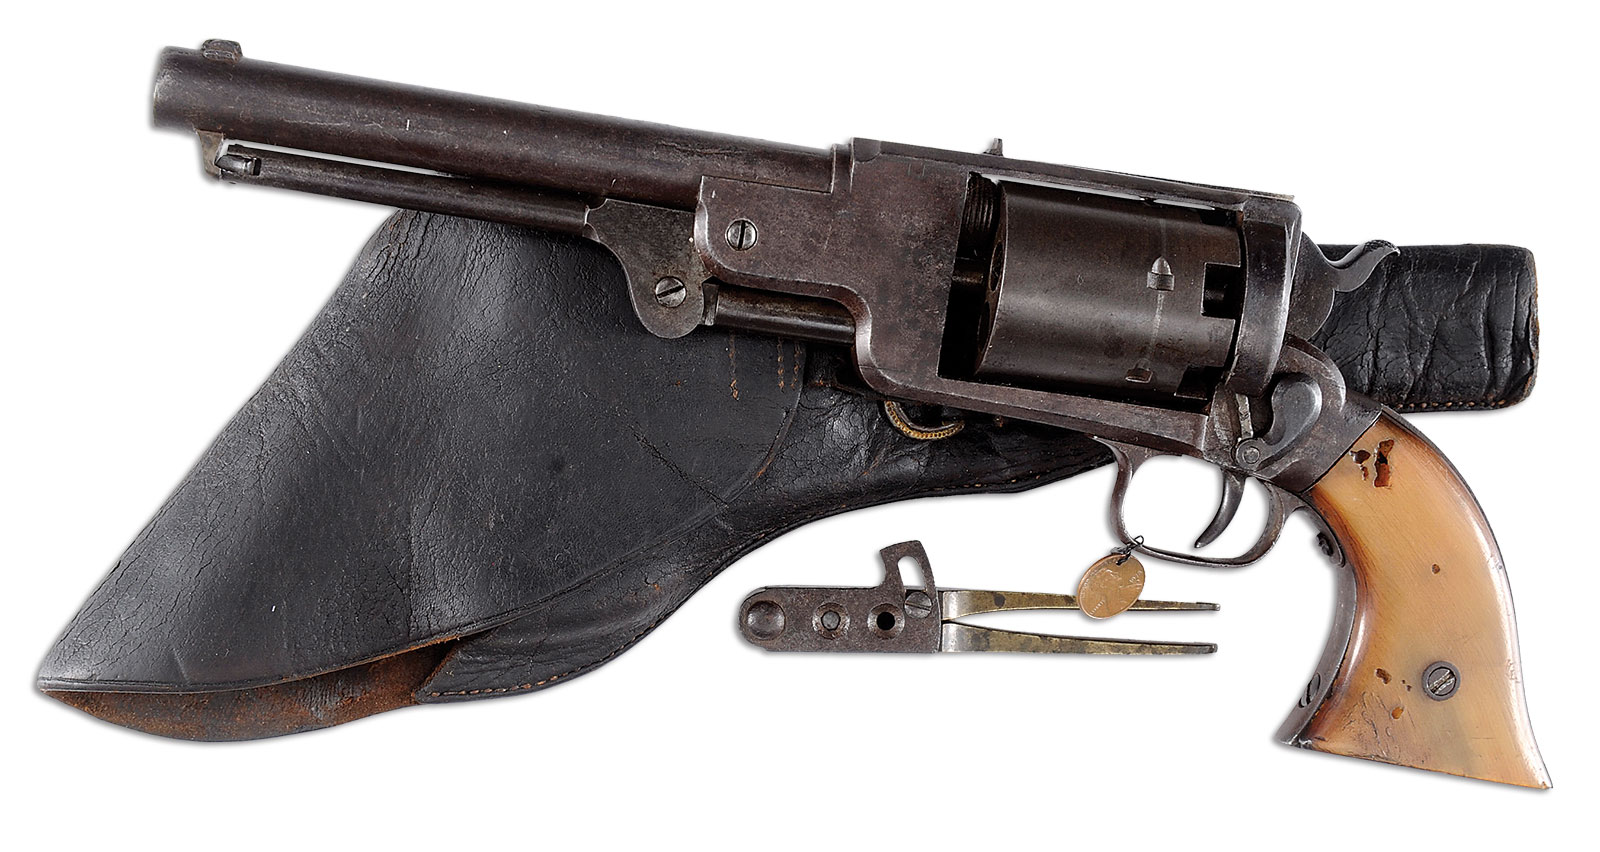 Extraordinarily Rare and Unique “Sisterdale Texas” Dragoon Army Revolver, Sold for $253,000